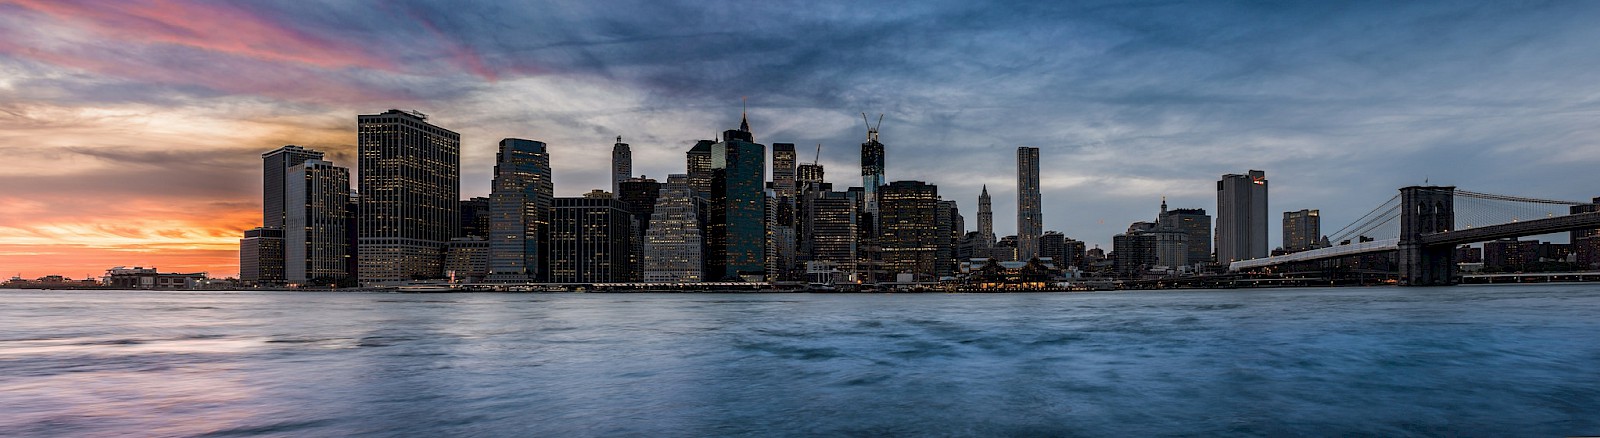 New York City skyline, by Arn BO at [Flickr](https://flic.kr/p/de9is3)